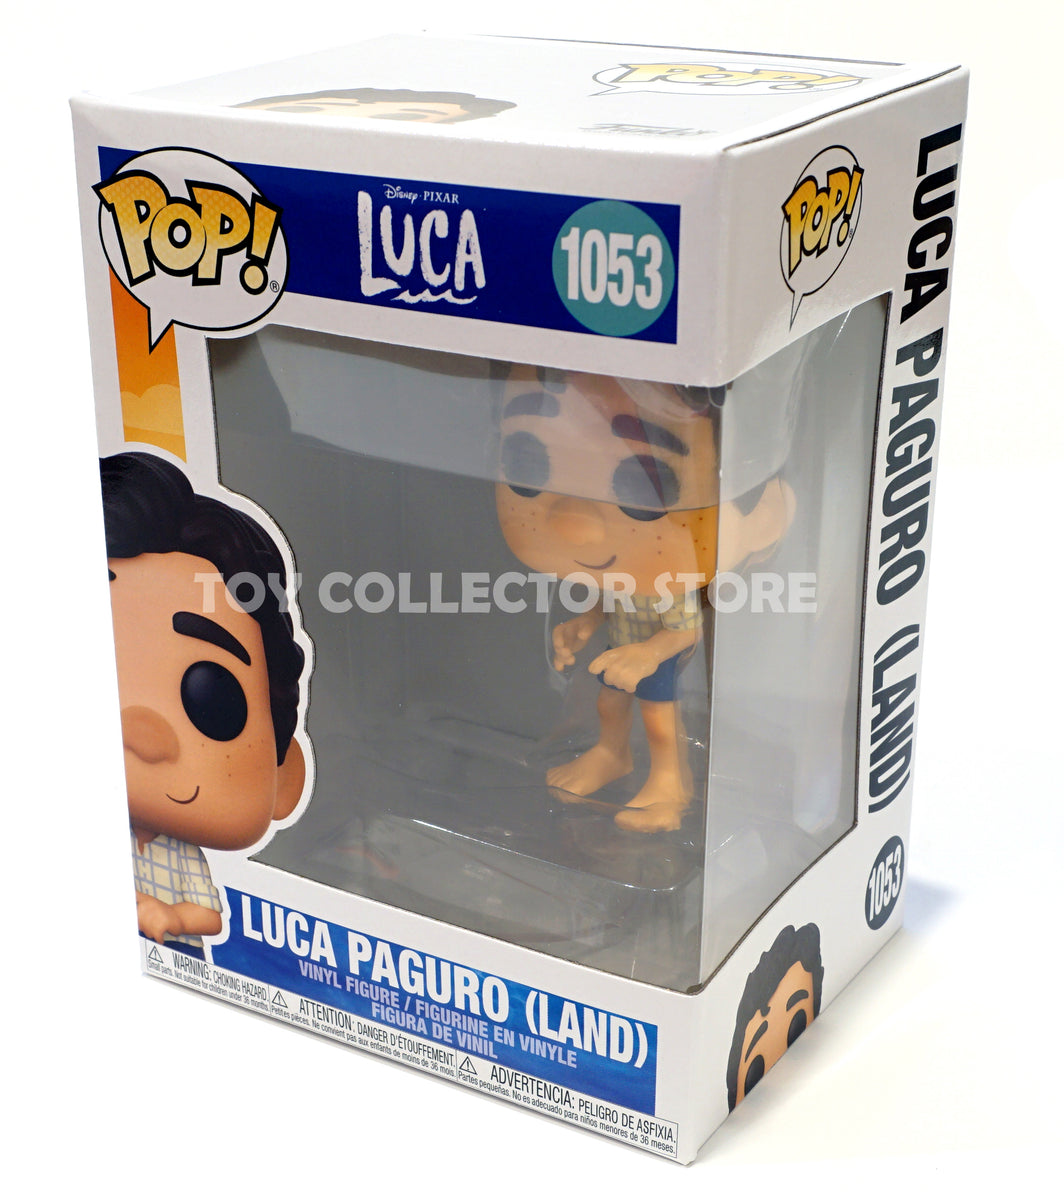 Funko POP!: Luca Paguro Pop! Vinyl Figure Gift Collectiable Sea